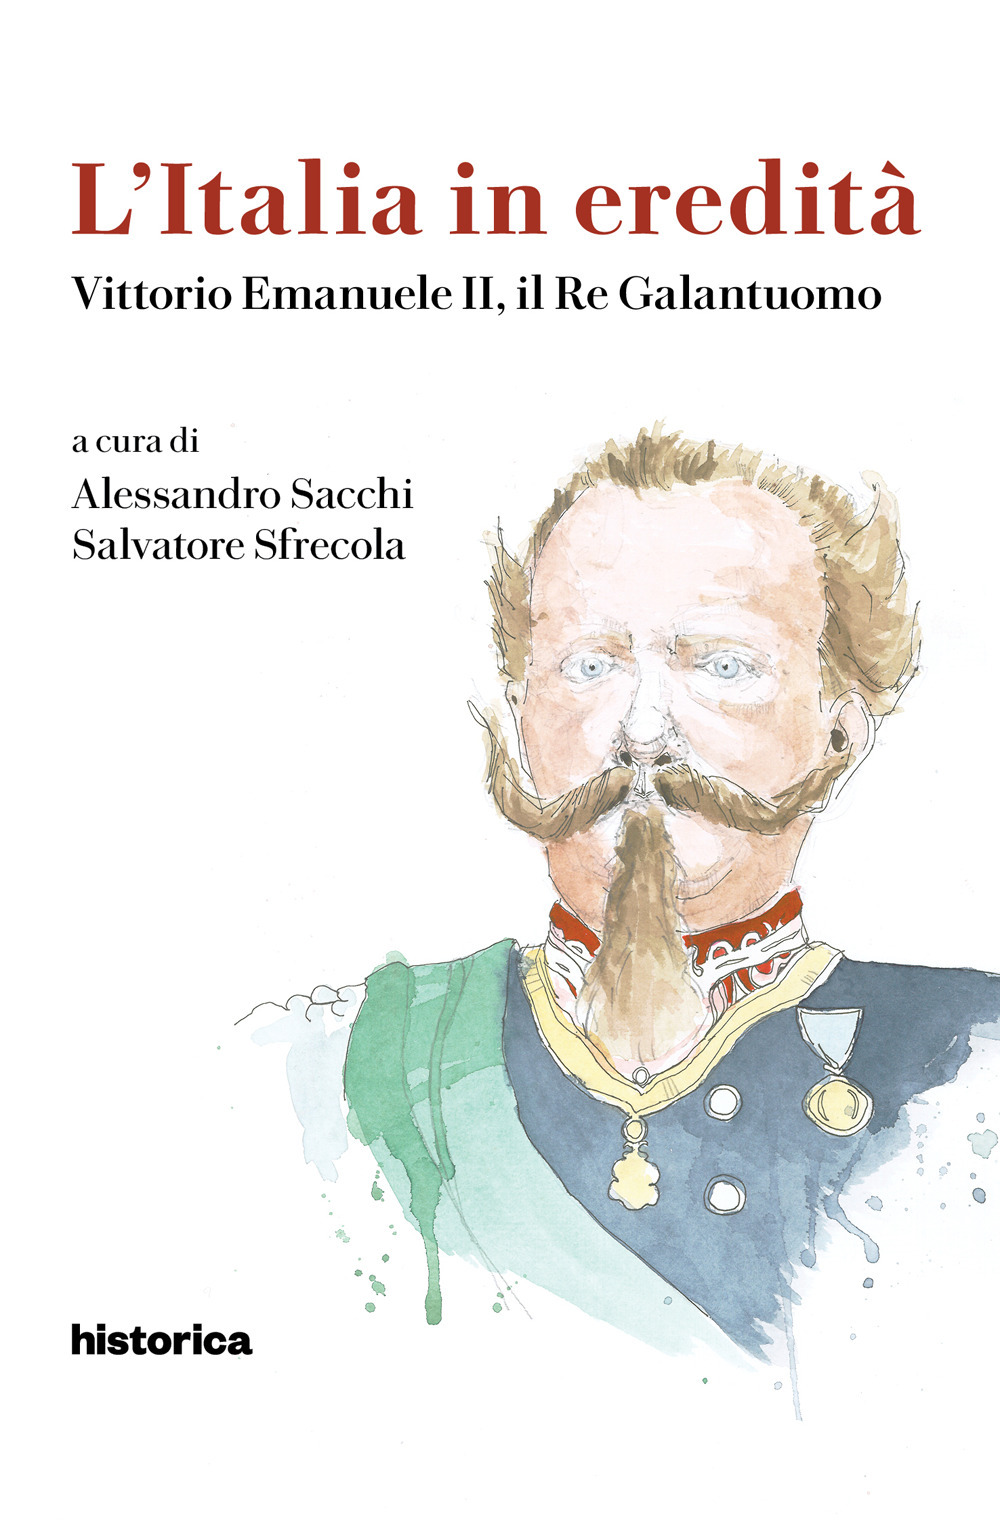 Vittorio Emanuele II: biografia e politica